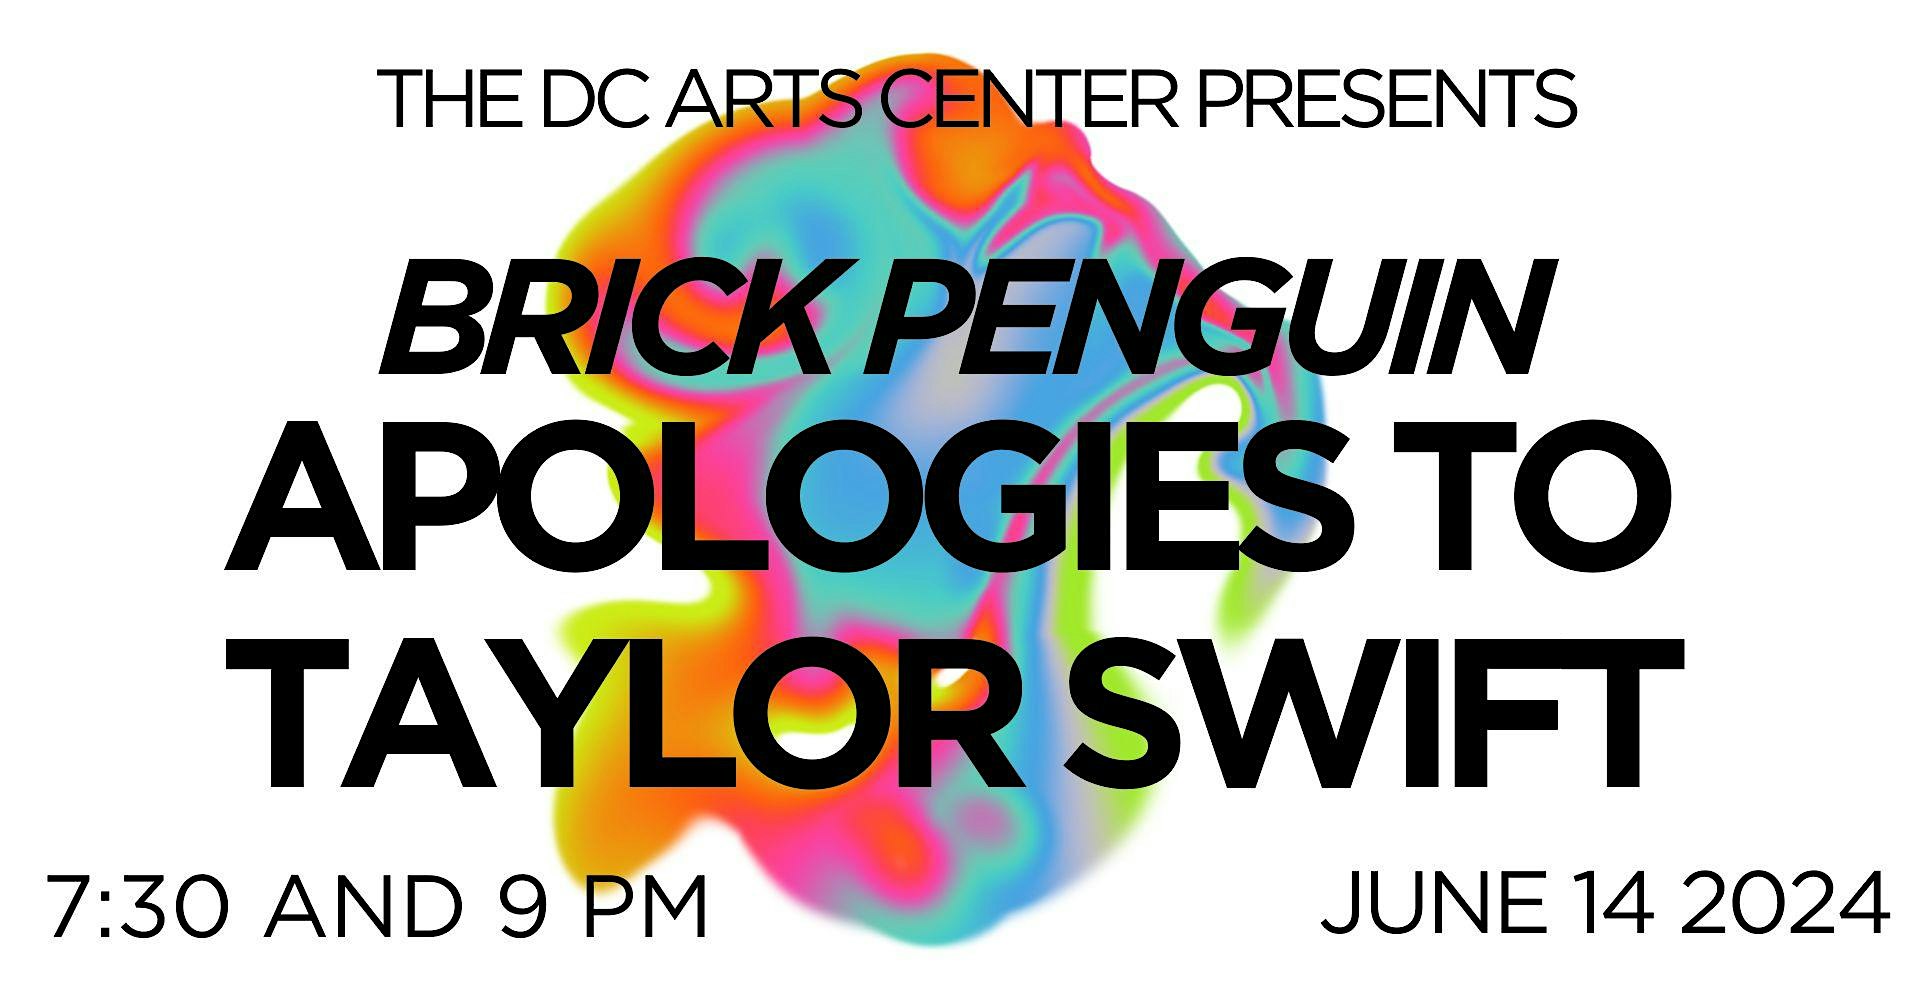 Brick Penguin: Apologies to Taylor Swift